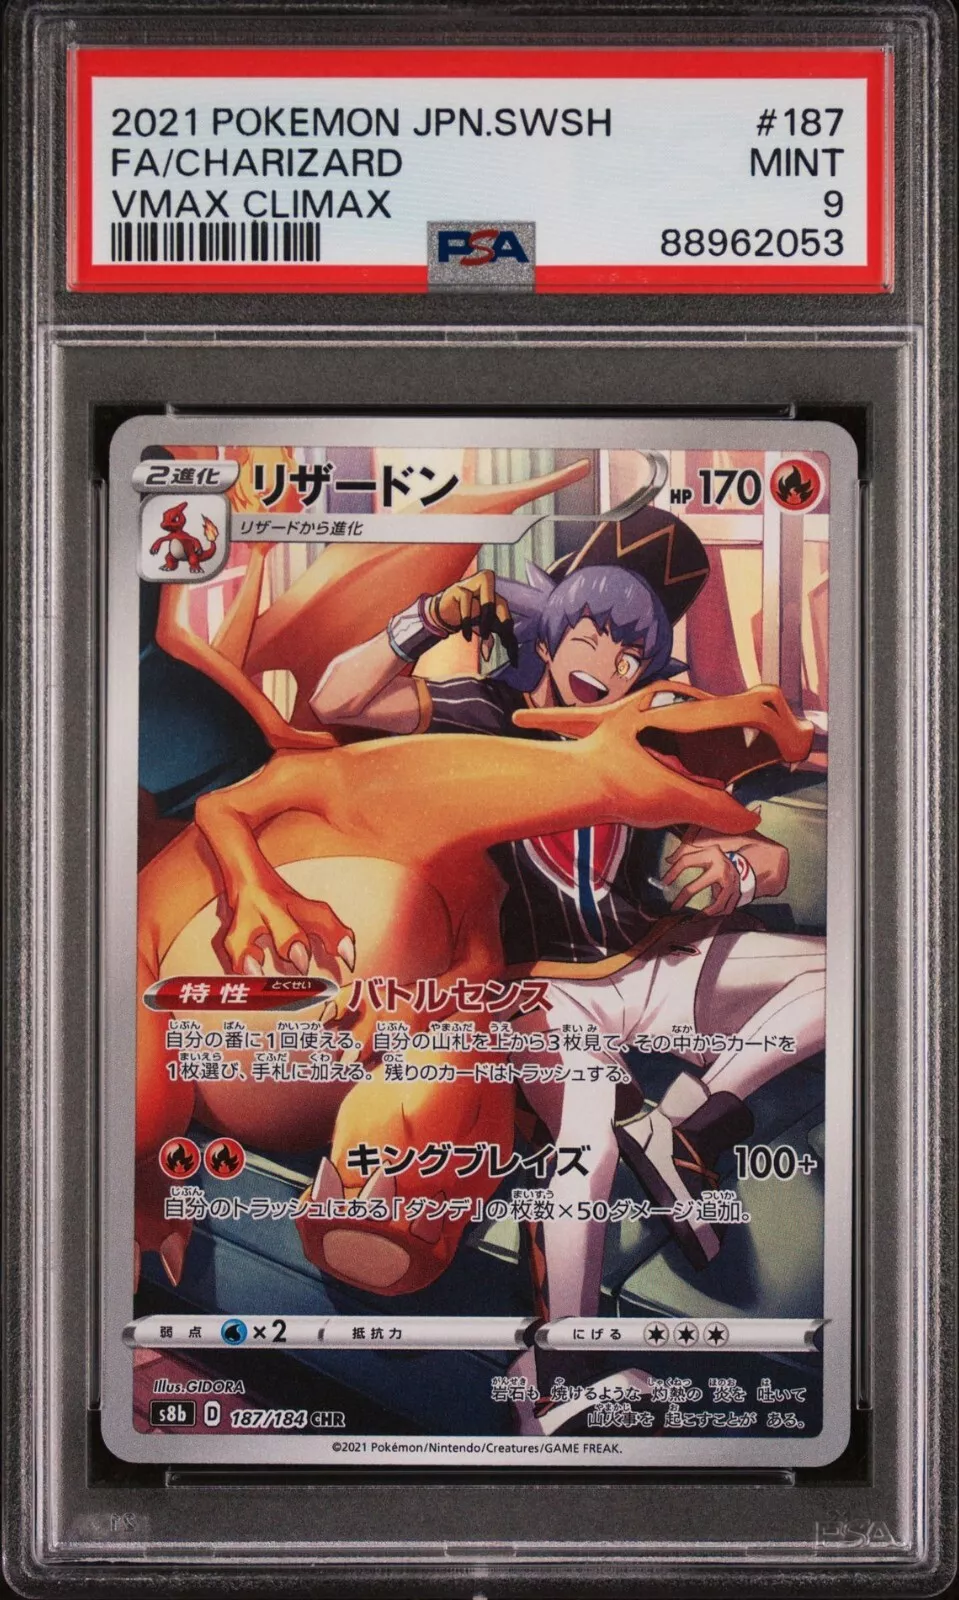 PSA 9 Charizard 187/184 CHR VMAX Climax FA Japanese Pokemon Card.